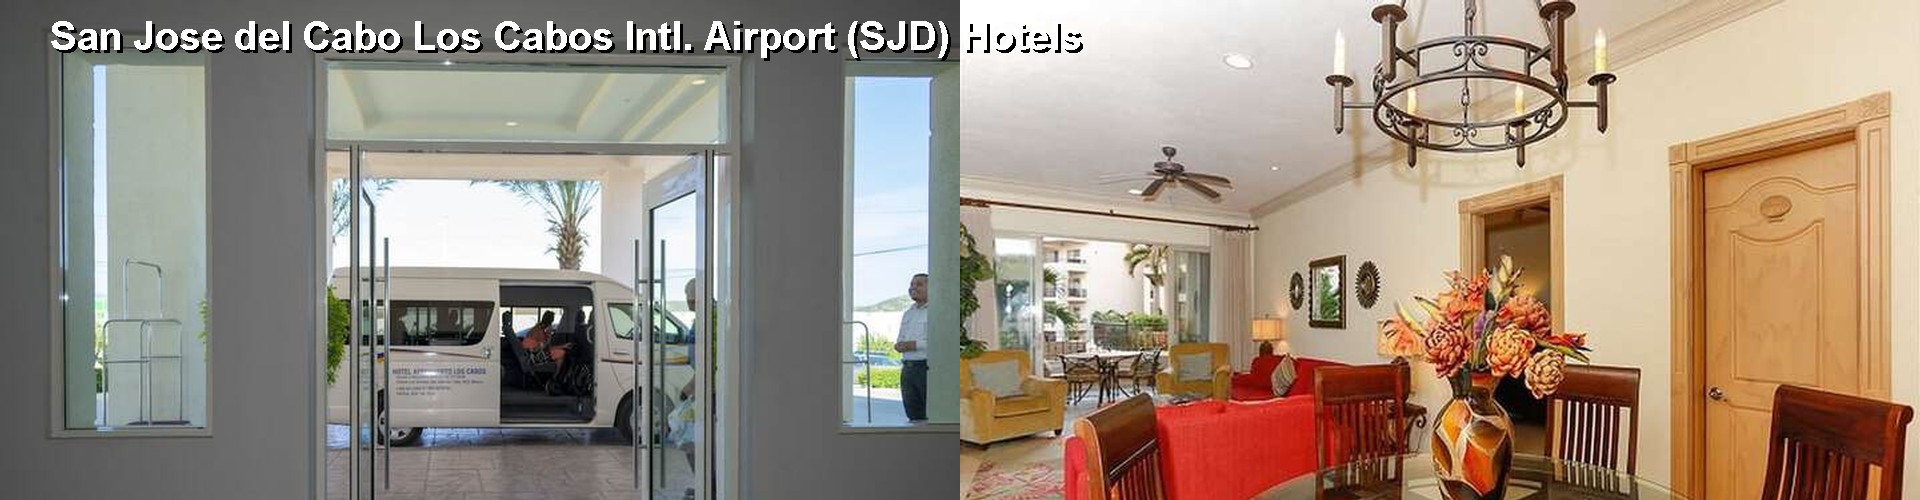 5 Best Hotels near San Jose del Cabo Los Cabos Intl. Airport (SJD)